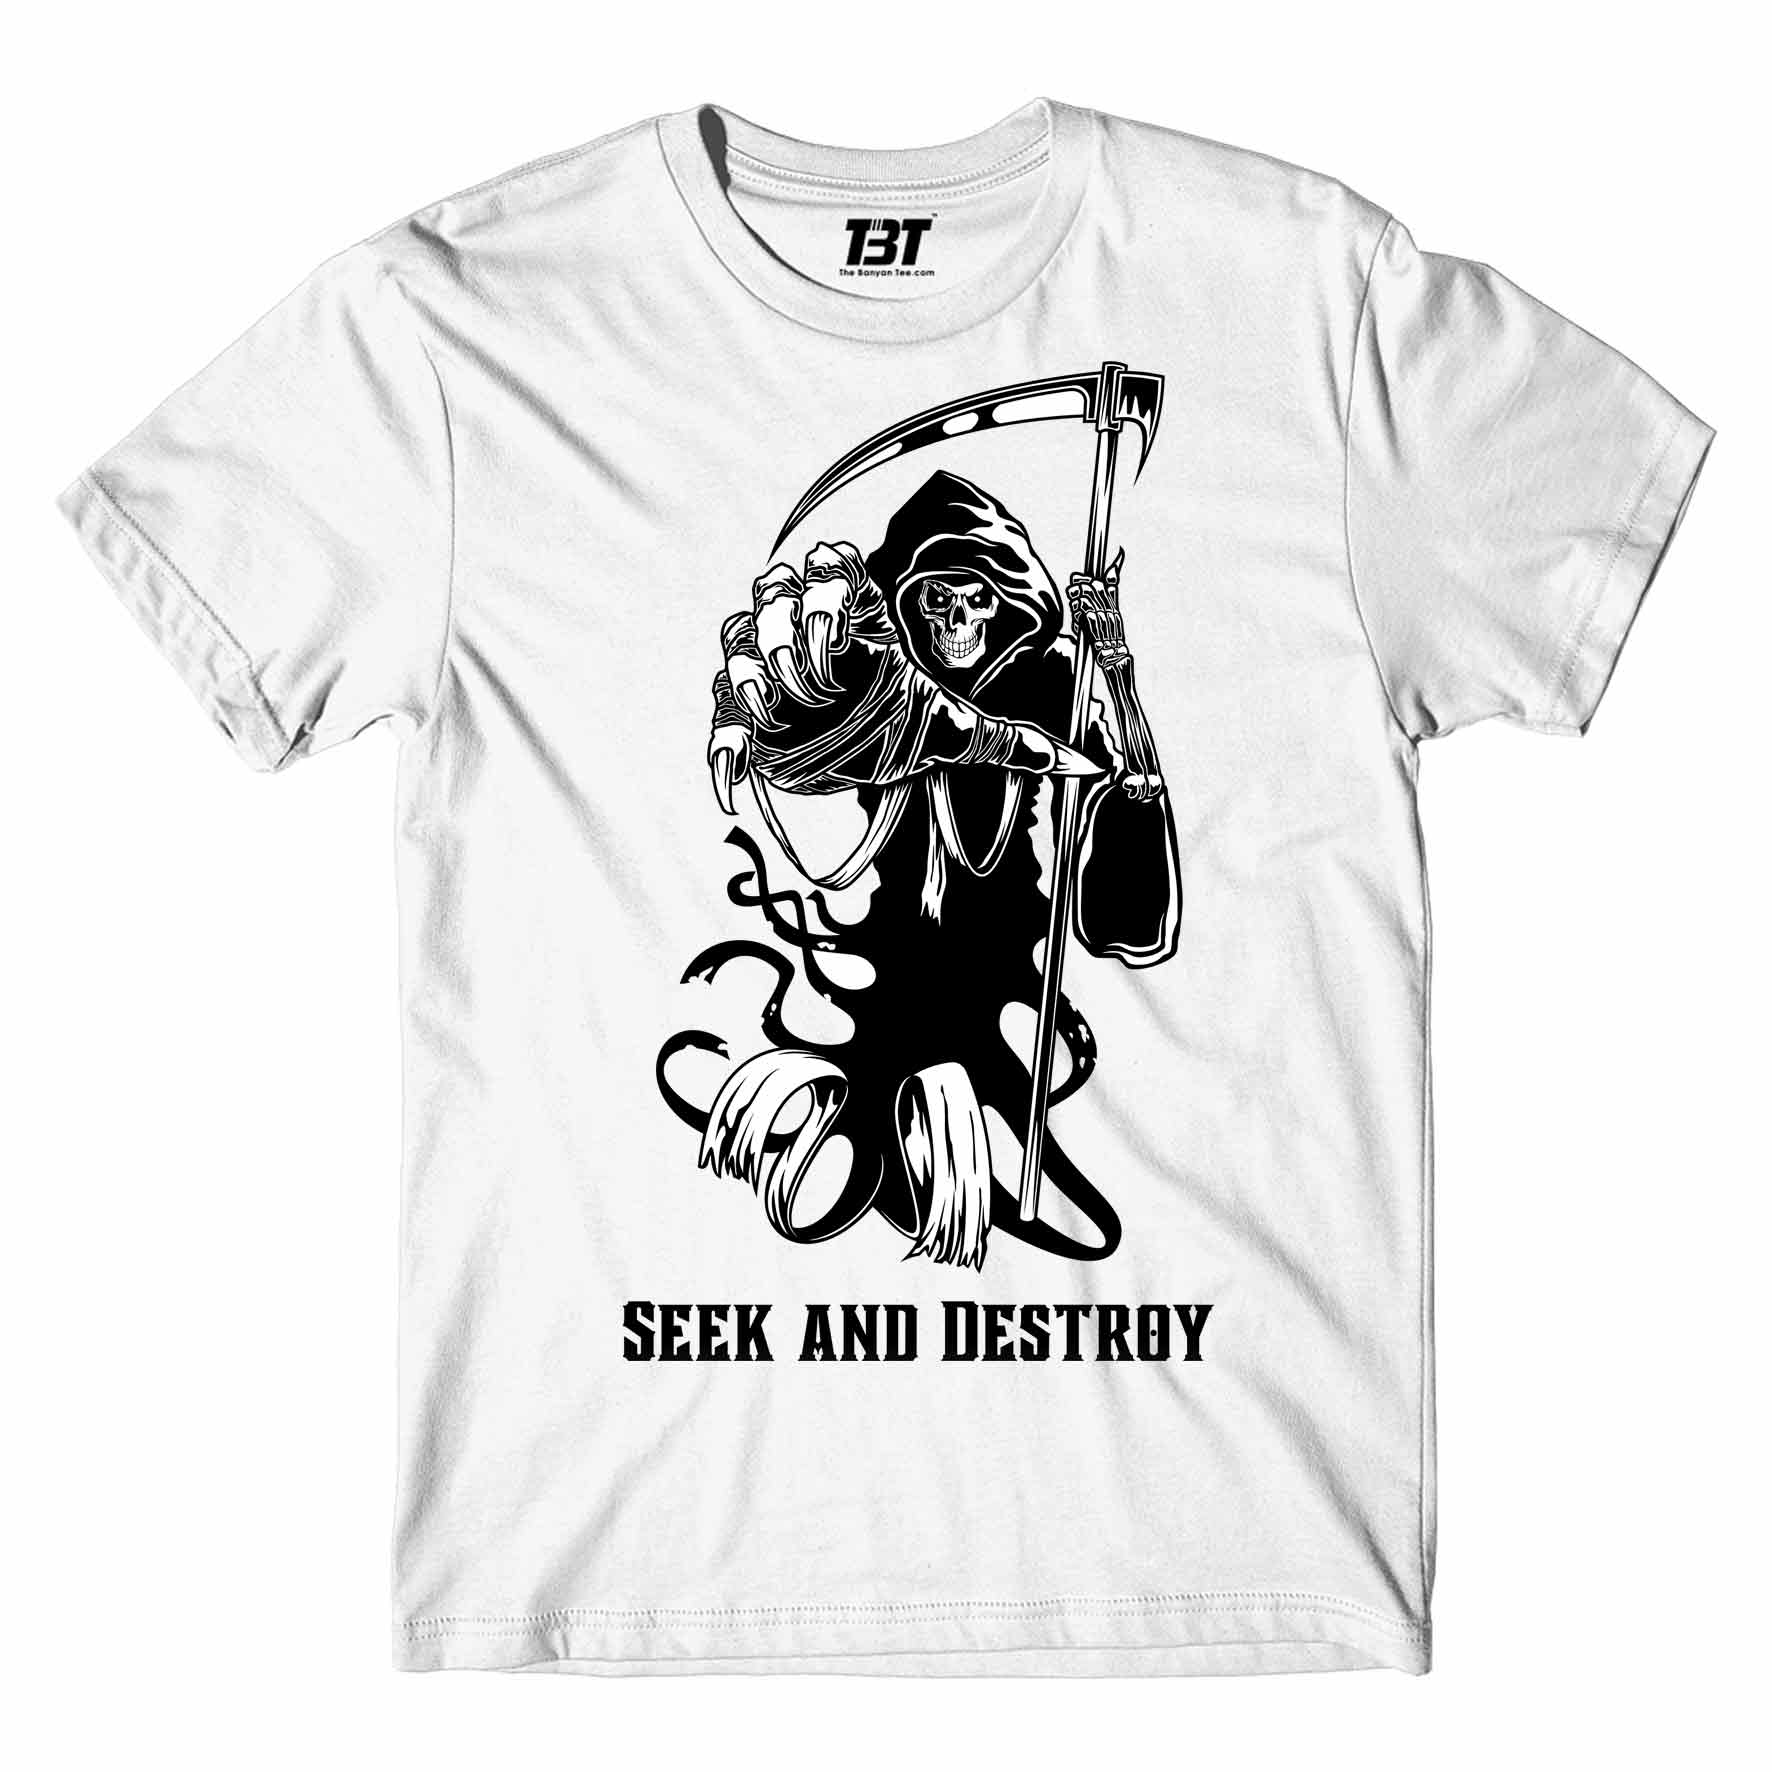 metallica seek & destroy t-shirt music band buy online india the banyan tee tbt men women girls boys unisex white 